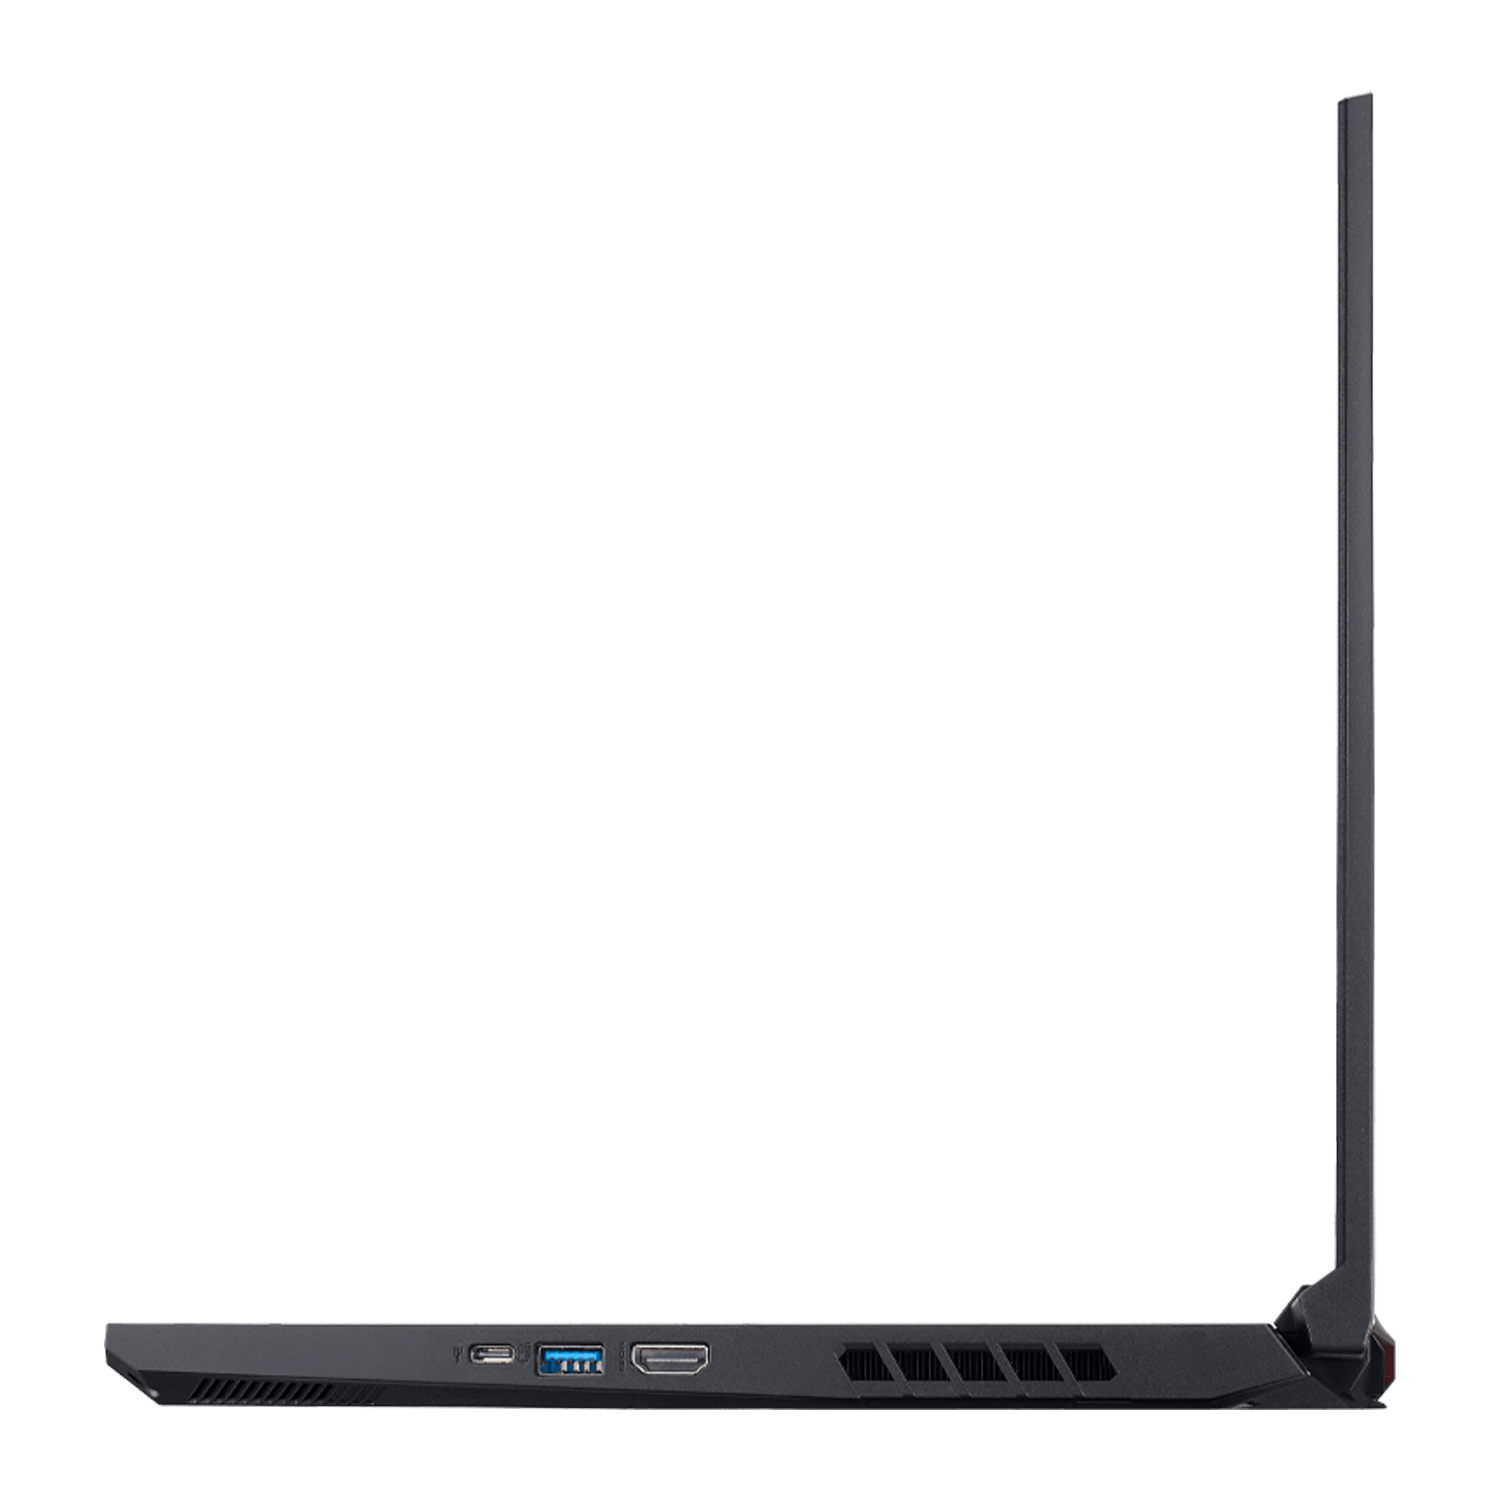 Notebook Acer AN515-55-55M1 i5-10300H / 512GB SSD / 8GB RAM / Tela 15.6" / GTX 1650 4GB